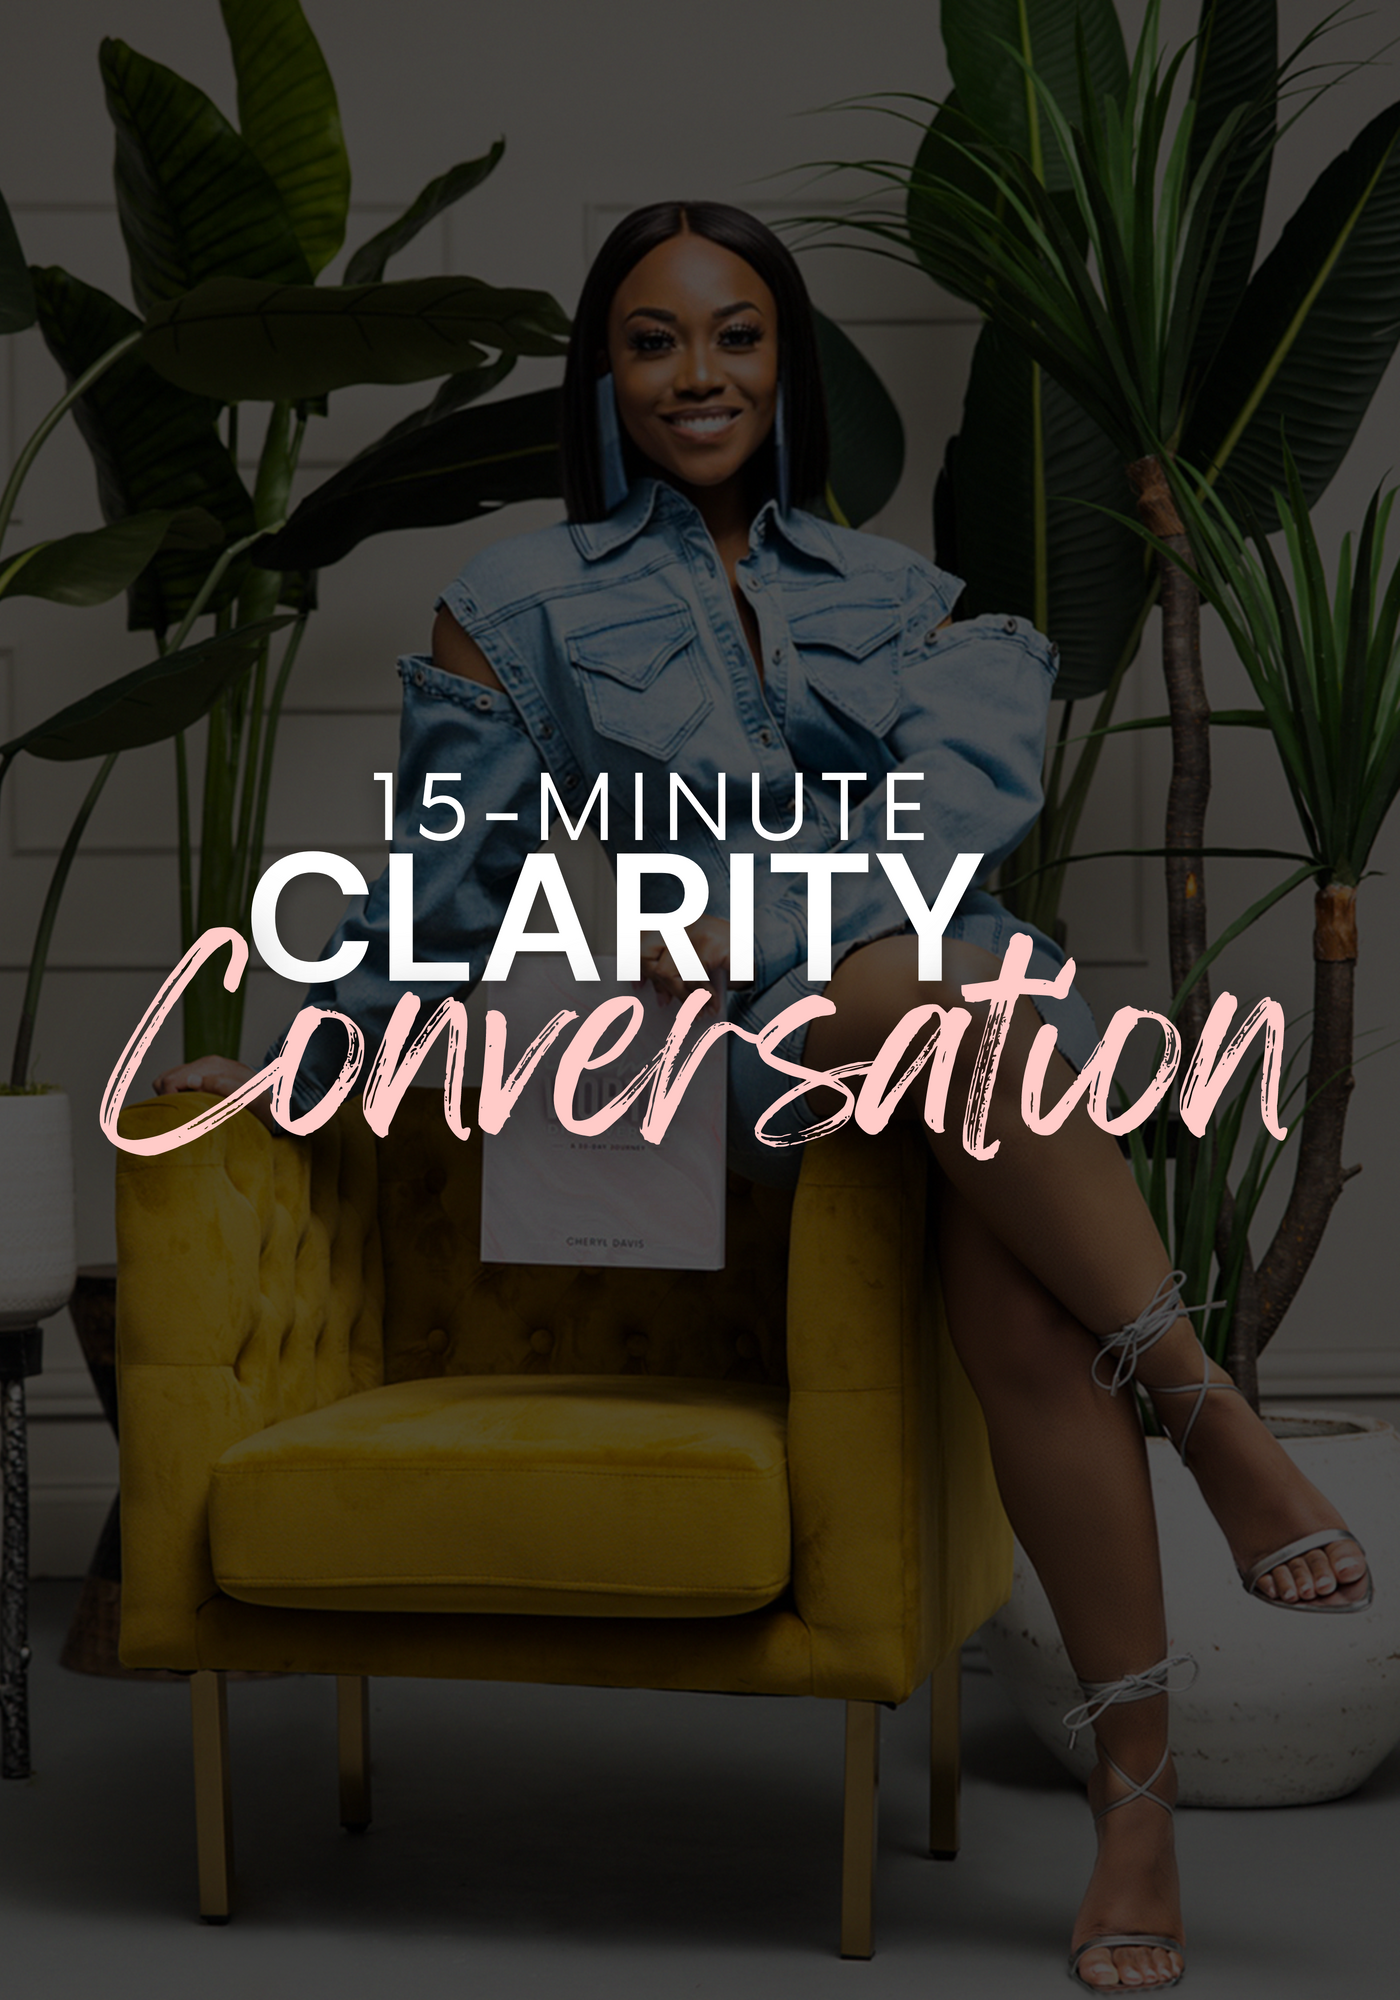 15 MINUTE | CLARITY CONVERSATION